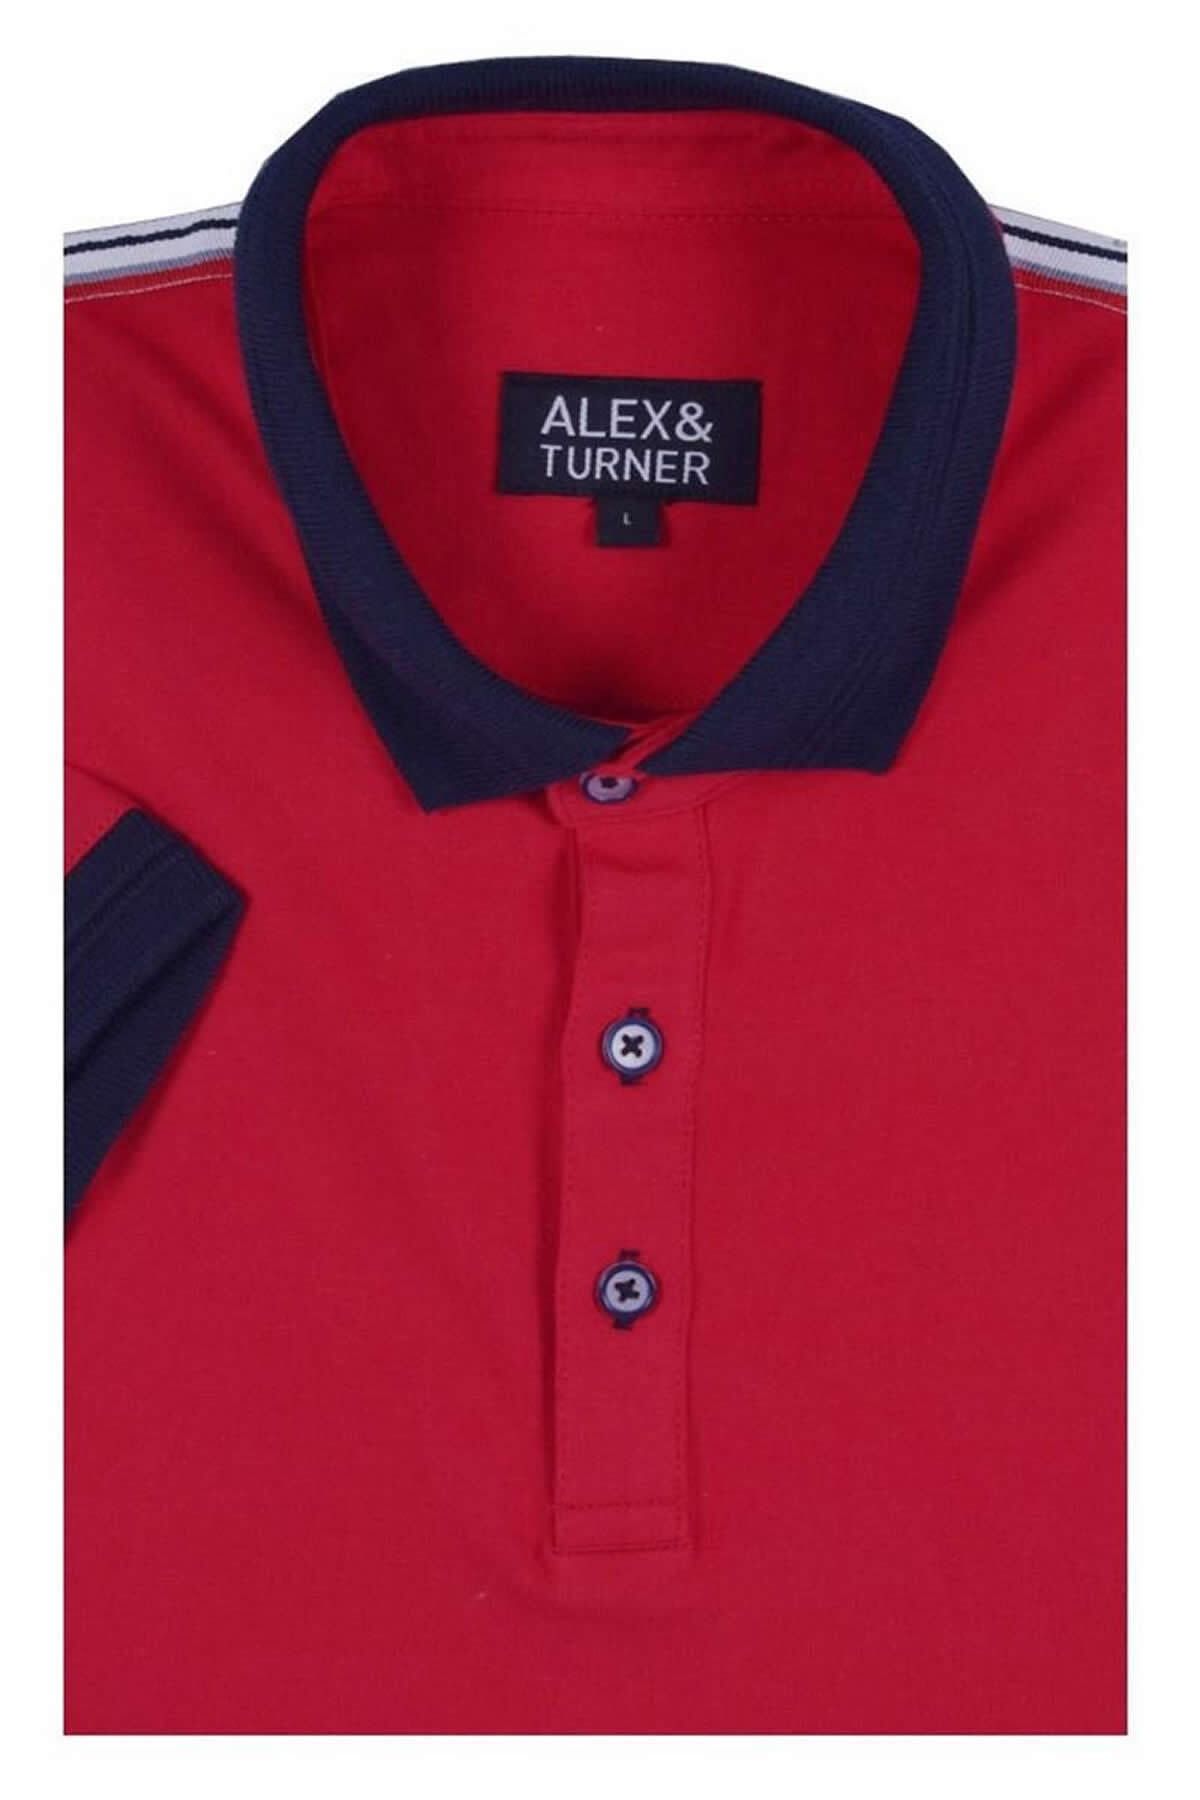 Ottomoda Erkek Düz Penye Kırmızı Kısa Kollu Polo T-shirt,at-p-21008